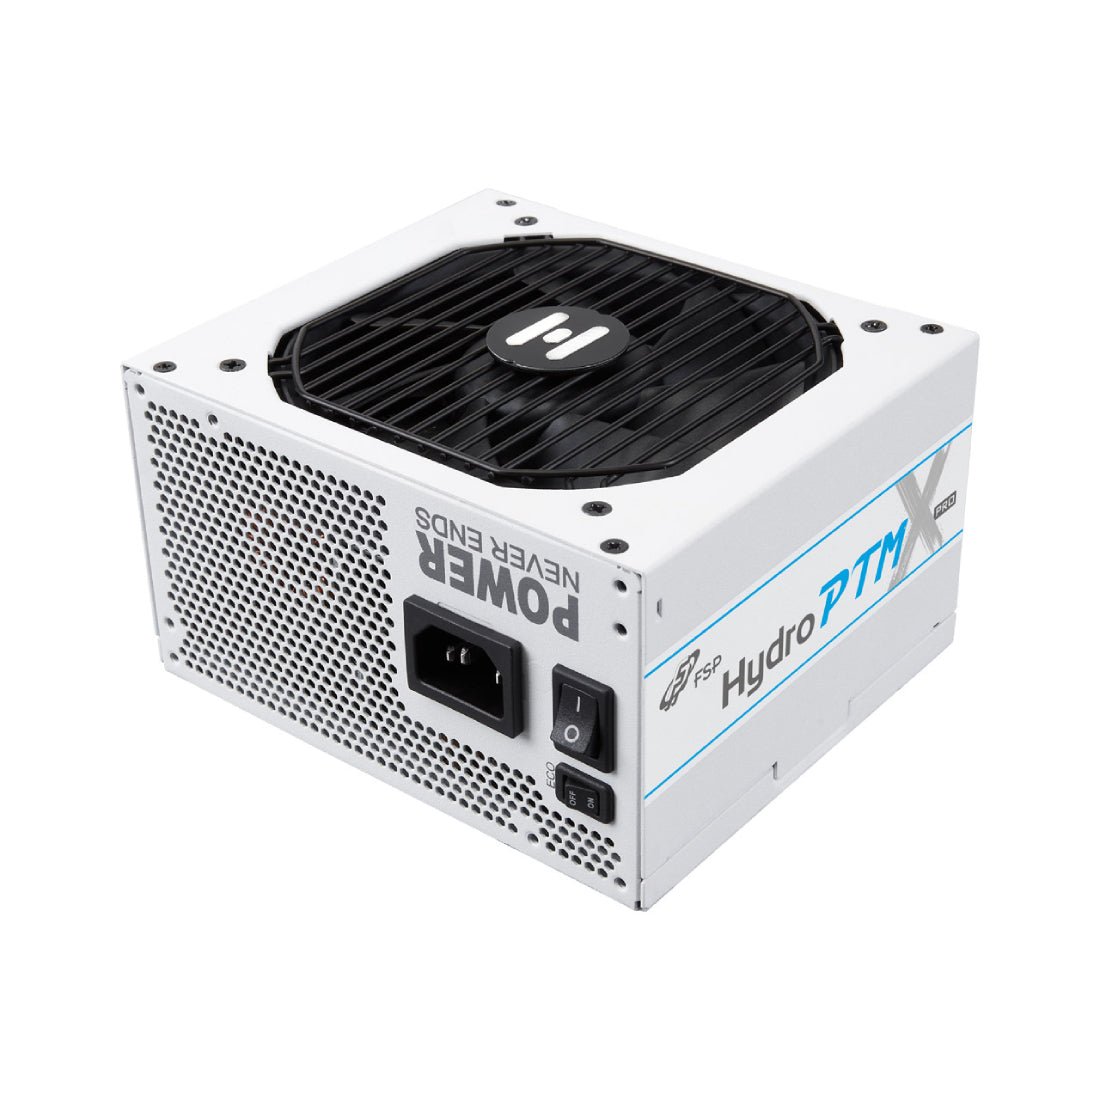 FSP Hydro PTM X Pro 1200W 80 Plus Platinum ATX Fully Modular Power Supply - White Edition - مزود طاقة - Store 974 | ستور ٩٧٤